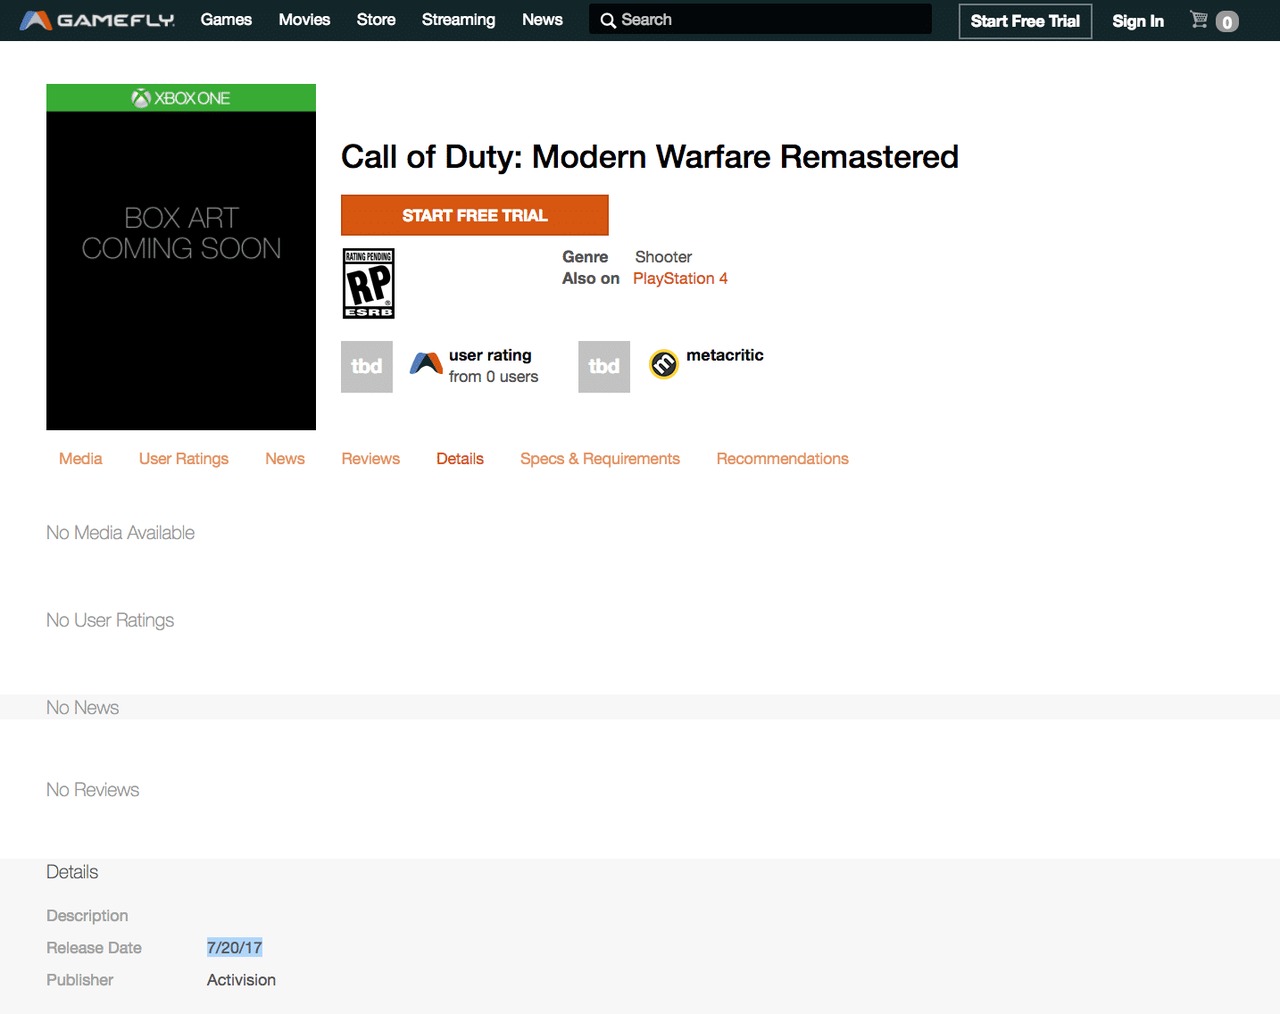        Call of Duty: Modern Warfare Remastered 